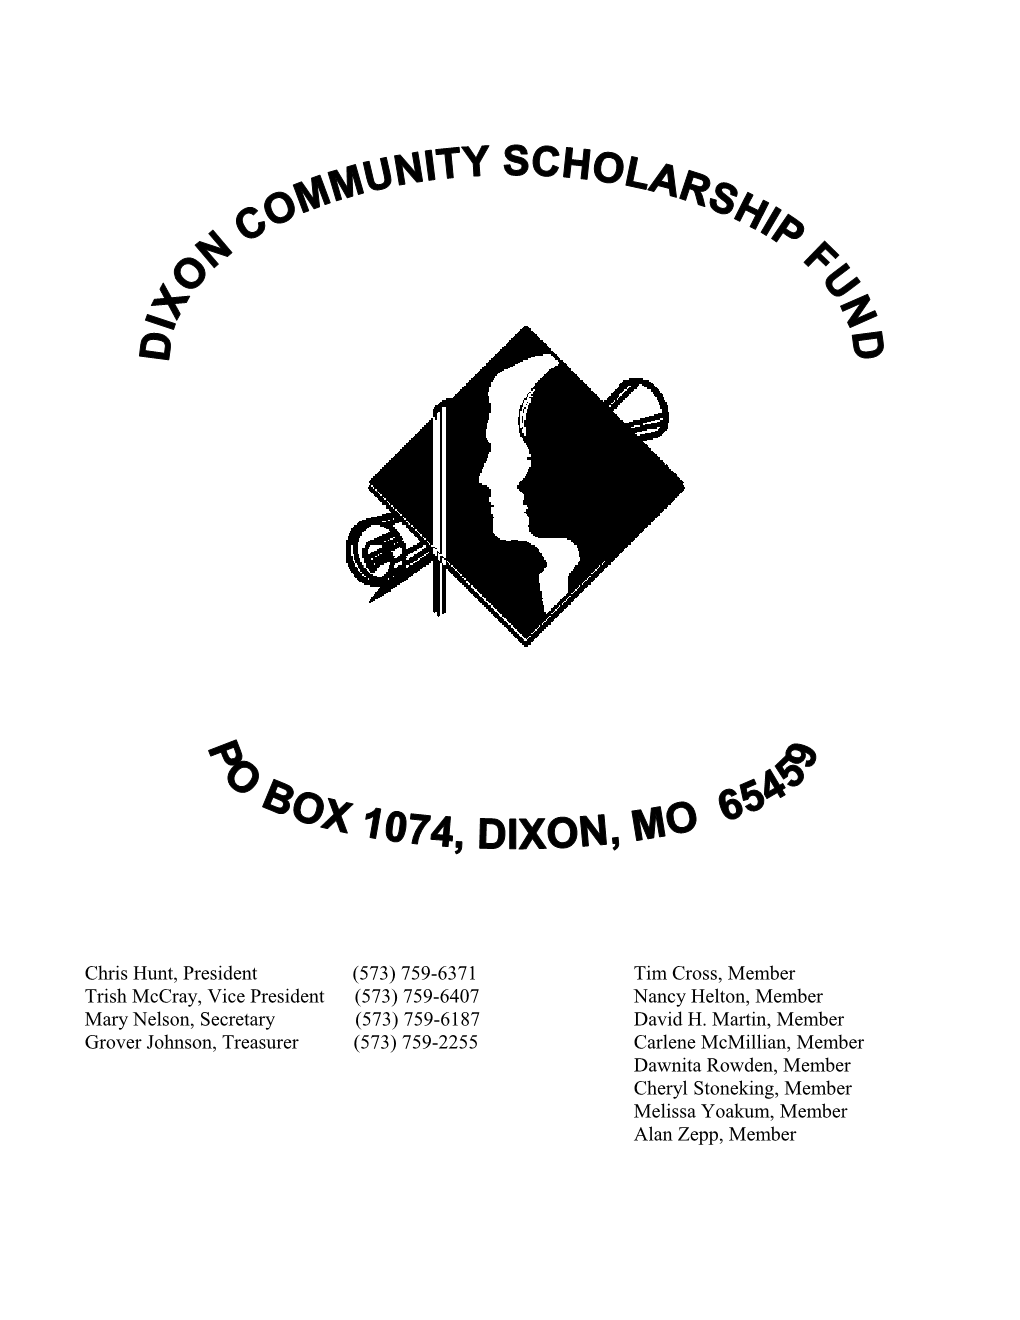 Dixon Community Scholarship Fund